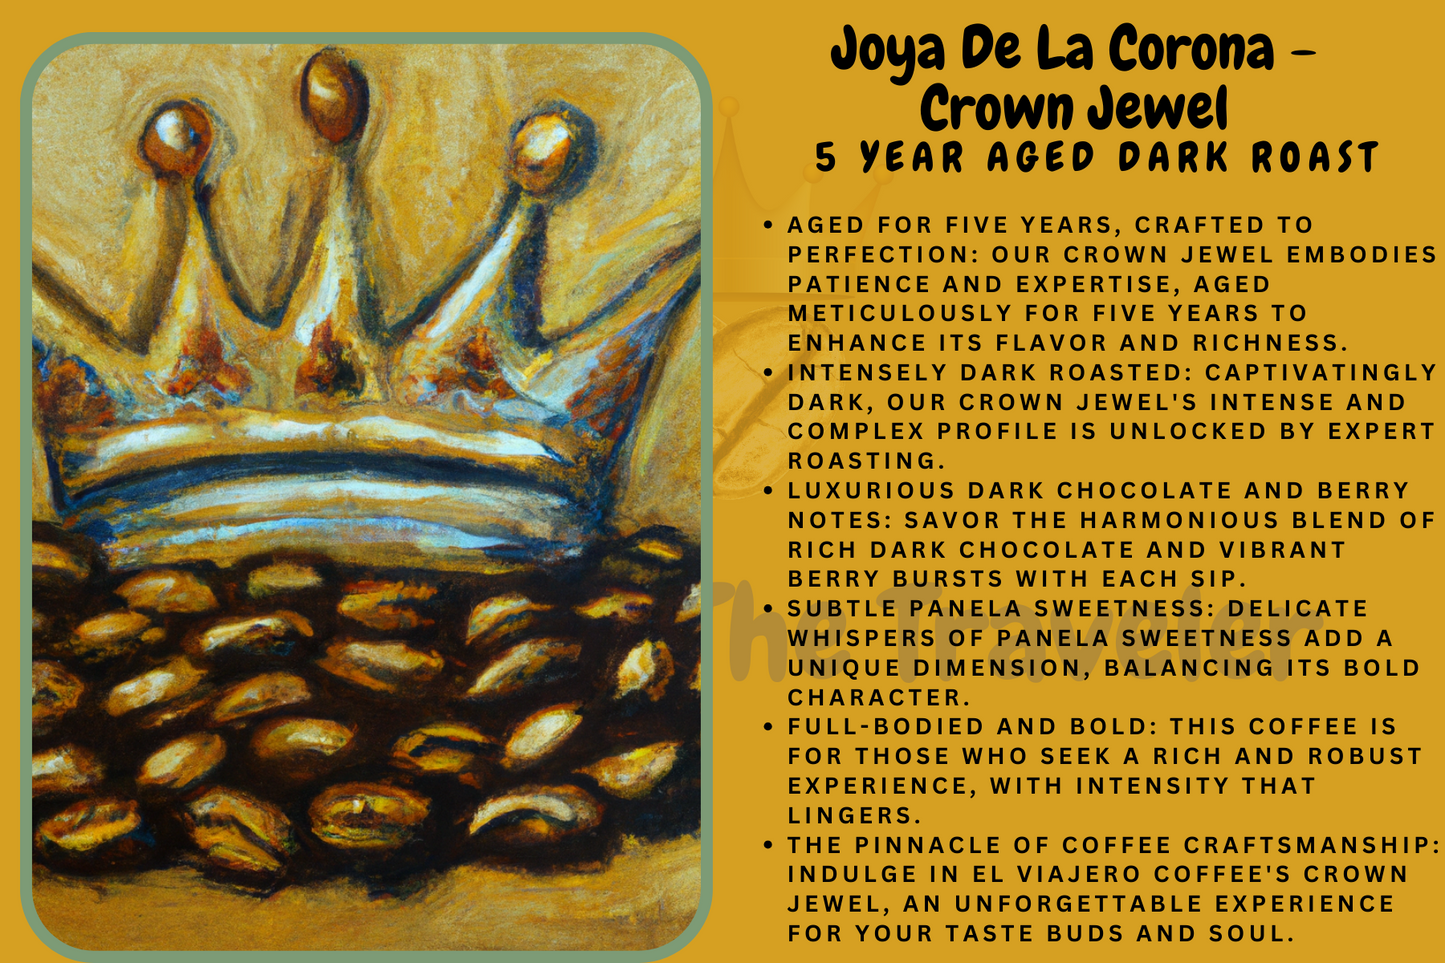 La Joya de la Corona - aged 5 years